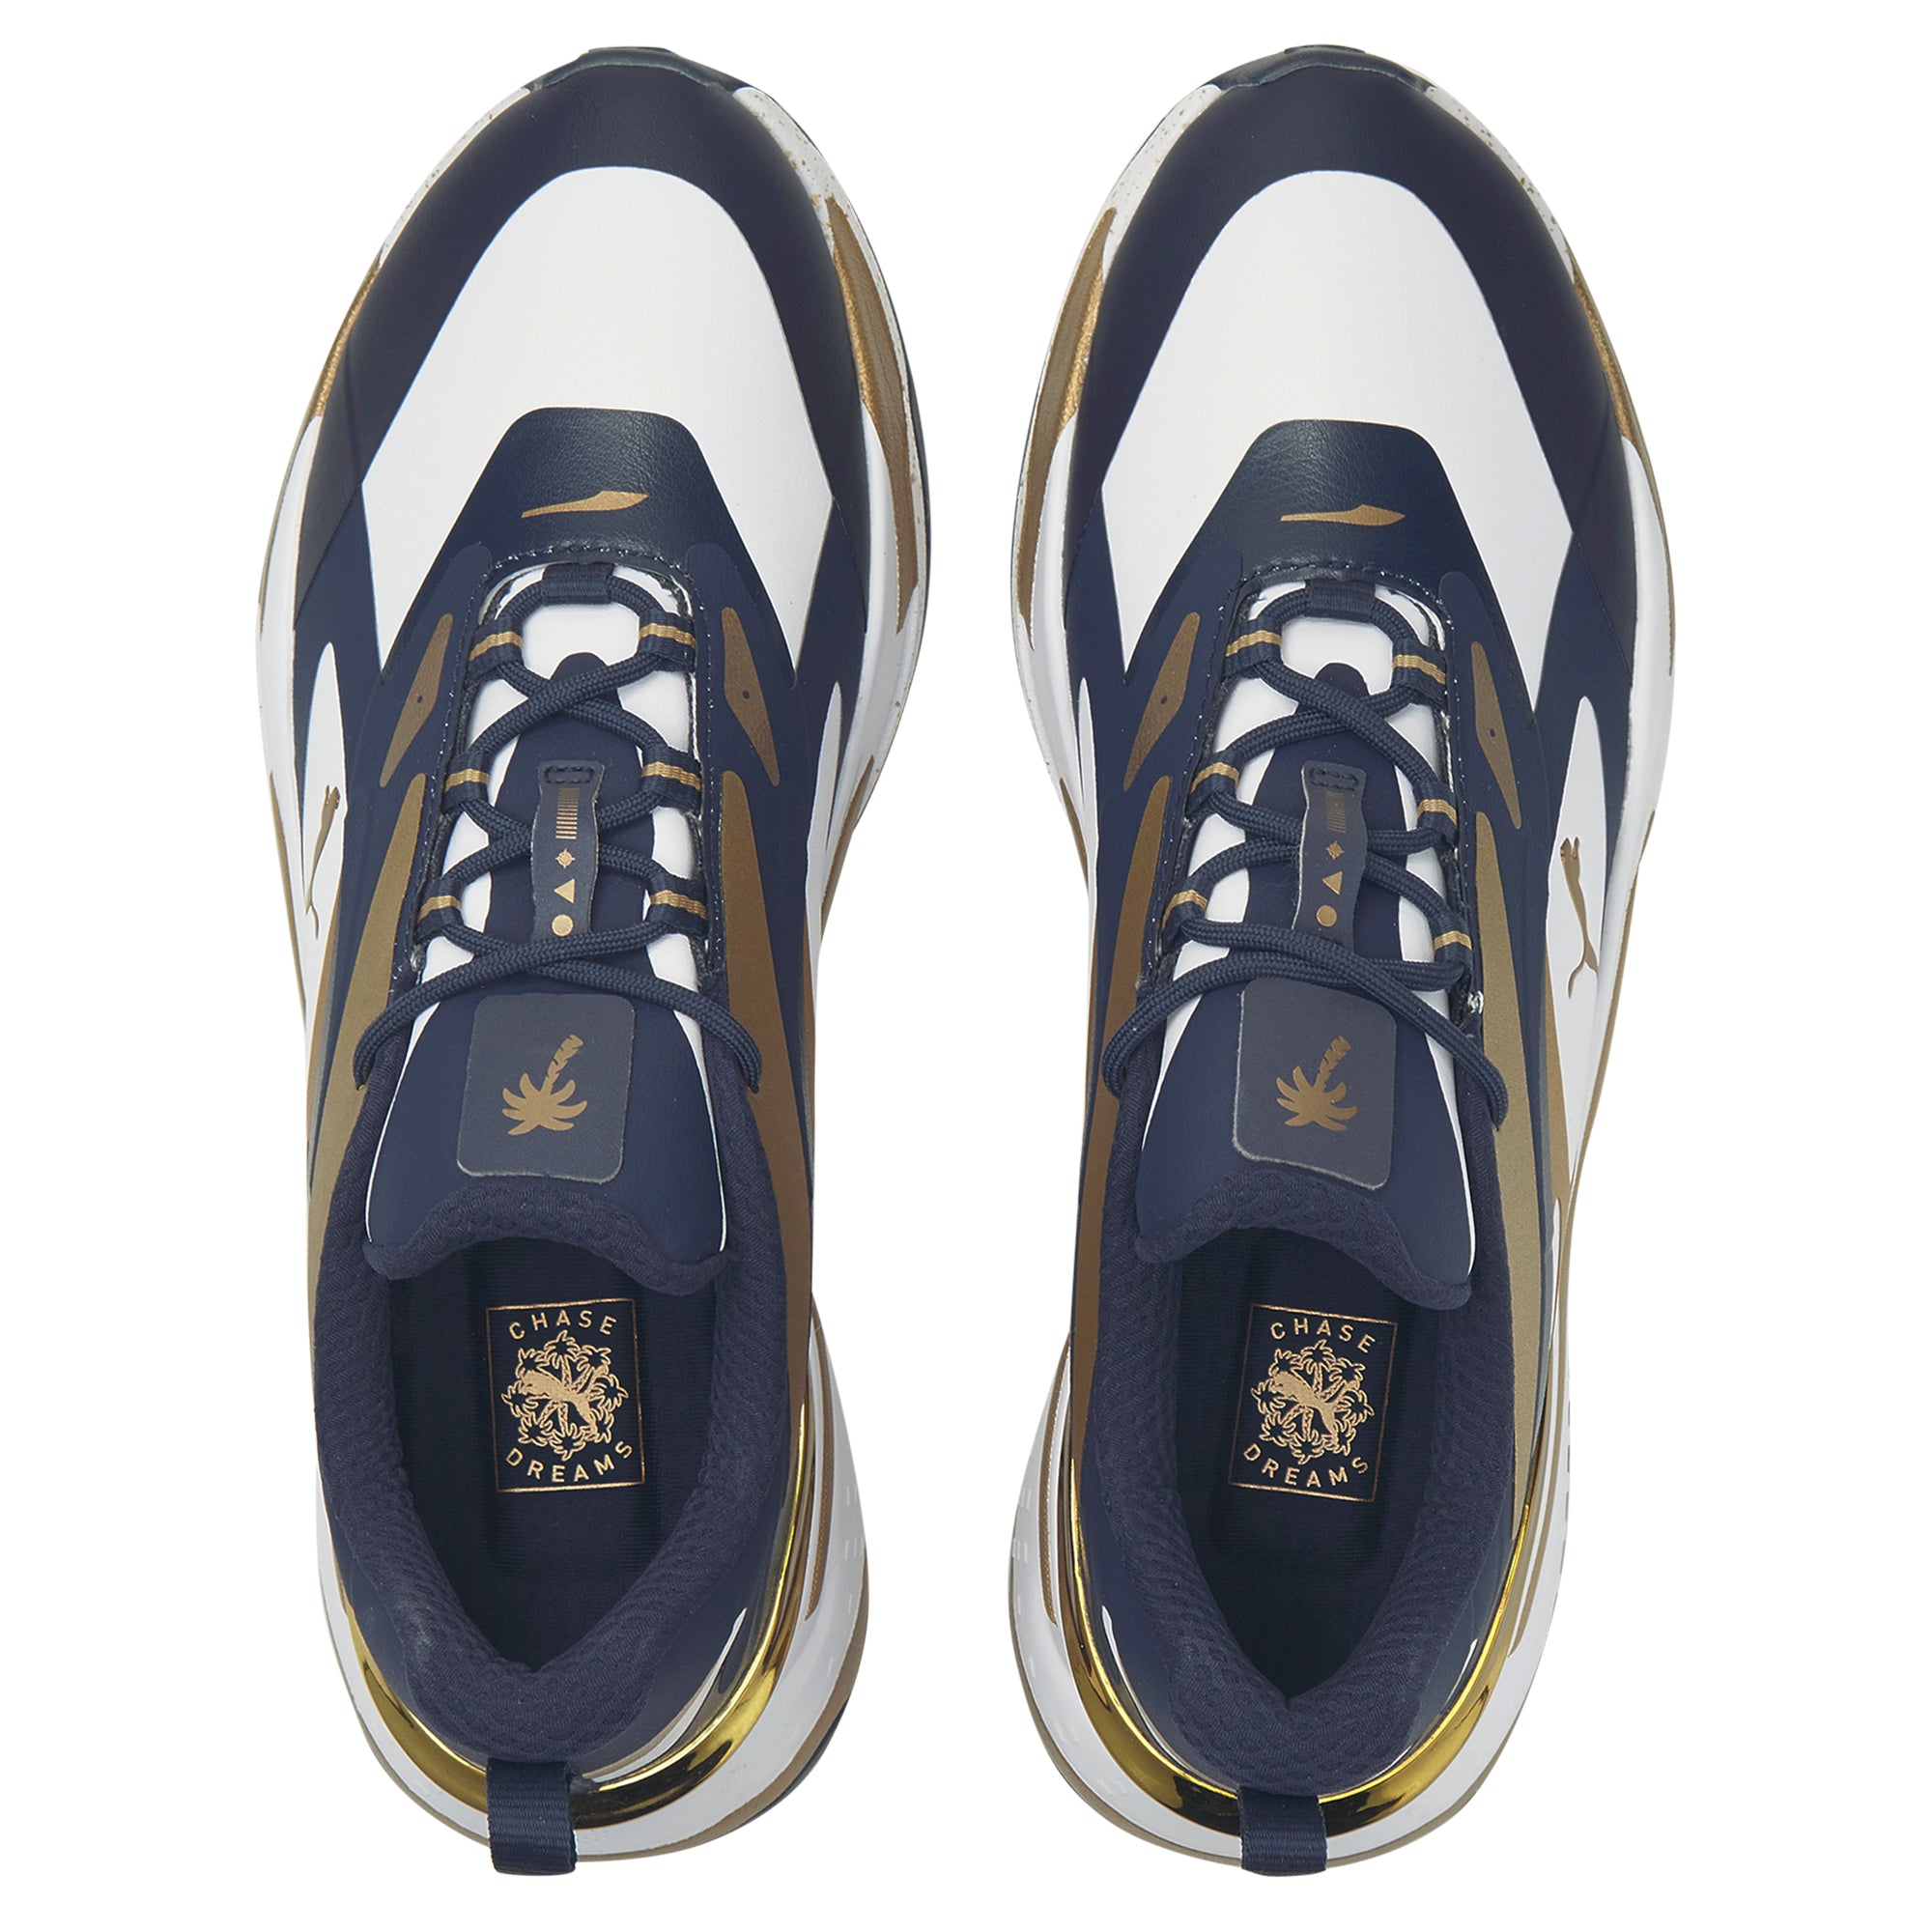 puma-x-ptc-gs-fast-golf-shoes-376501-navy-blazer-gold-puma-white-01